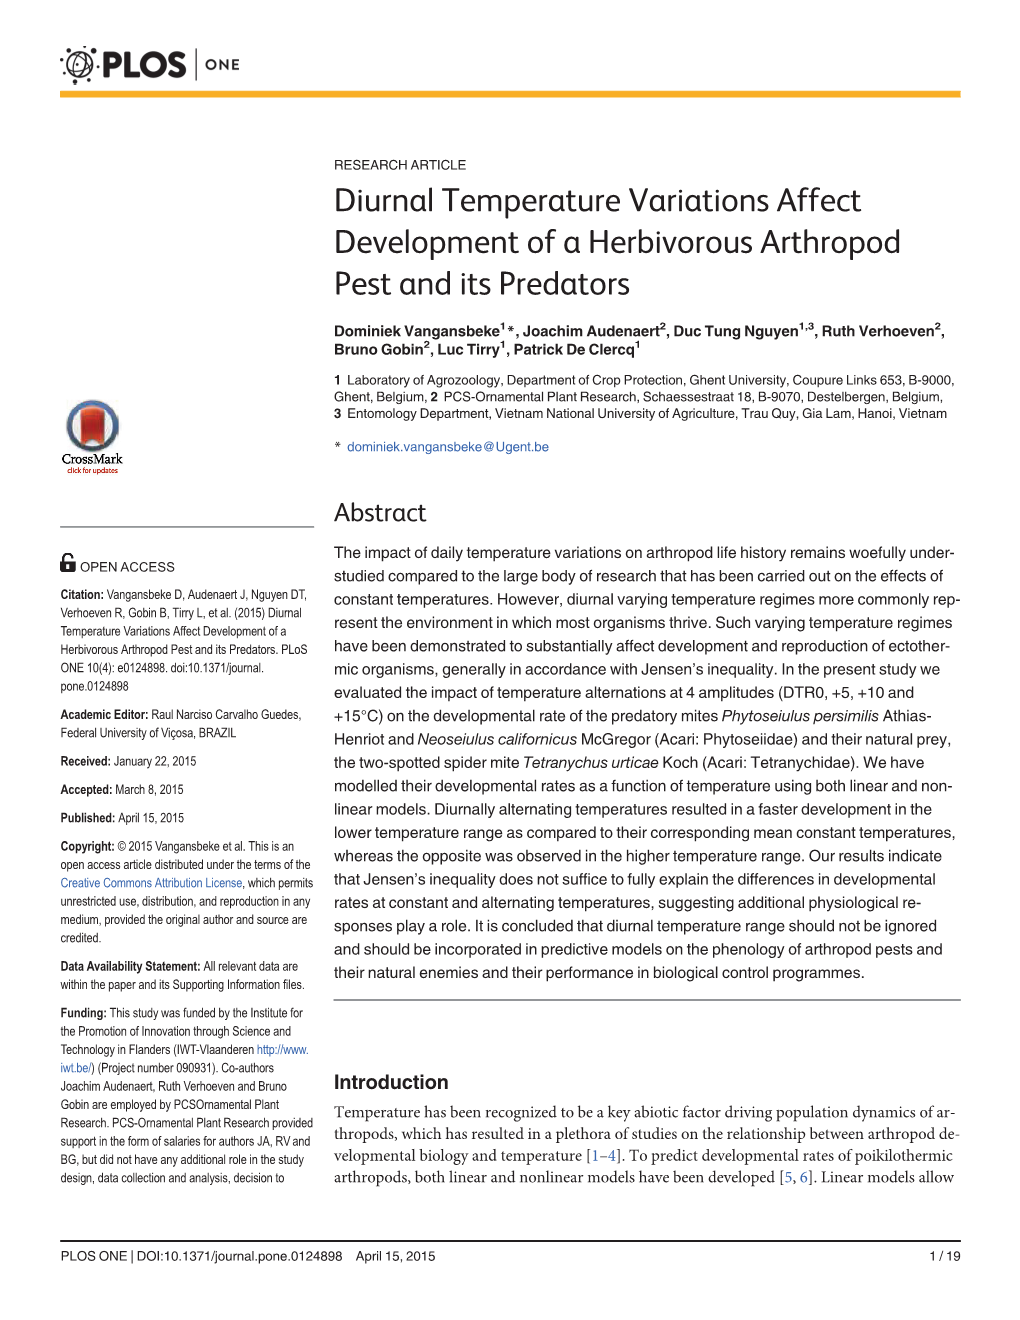 Diurnal Temperature Variations Affect Development of a Herbivorous Arthropod Pest and Its Predators